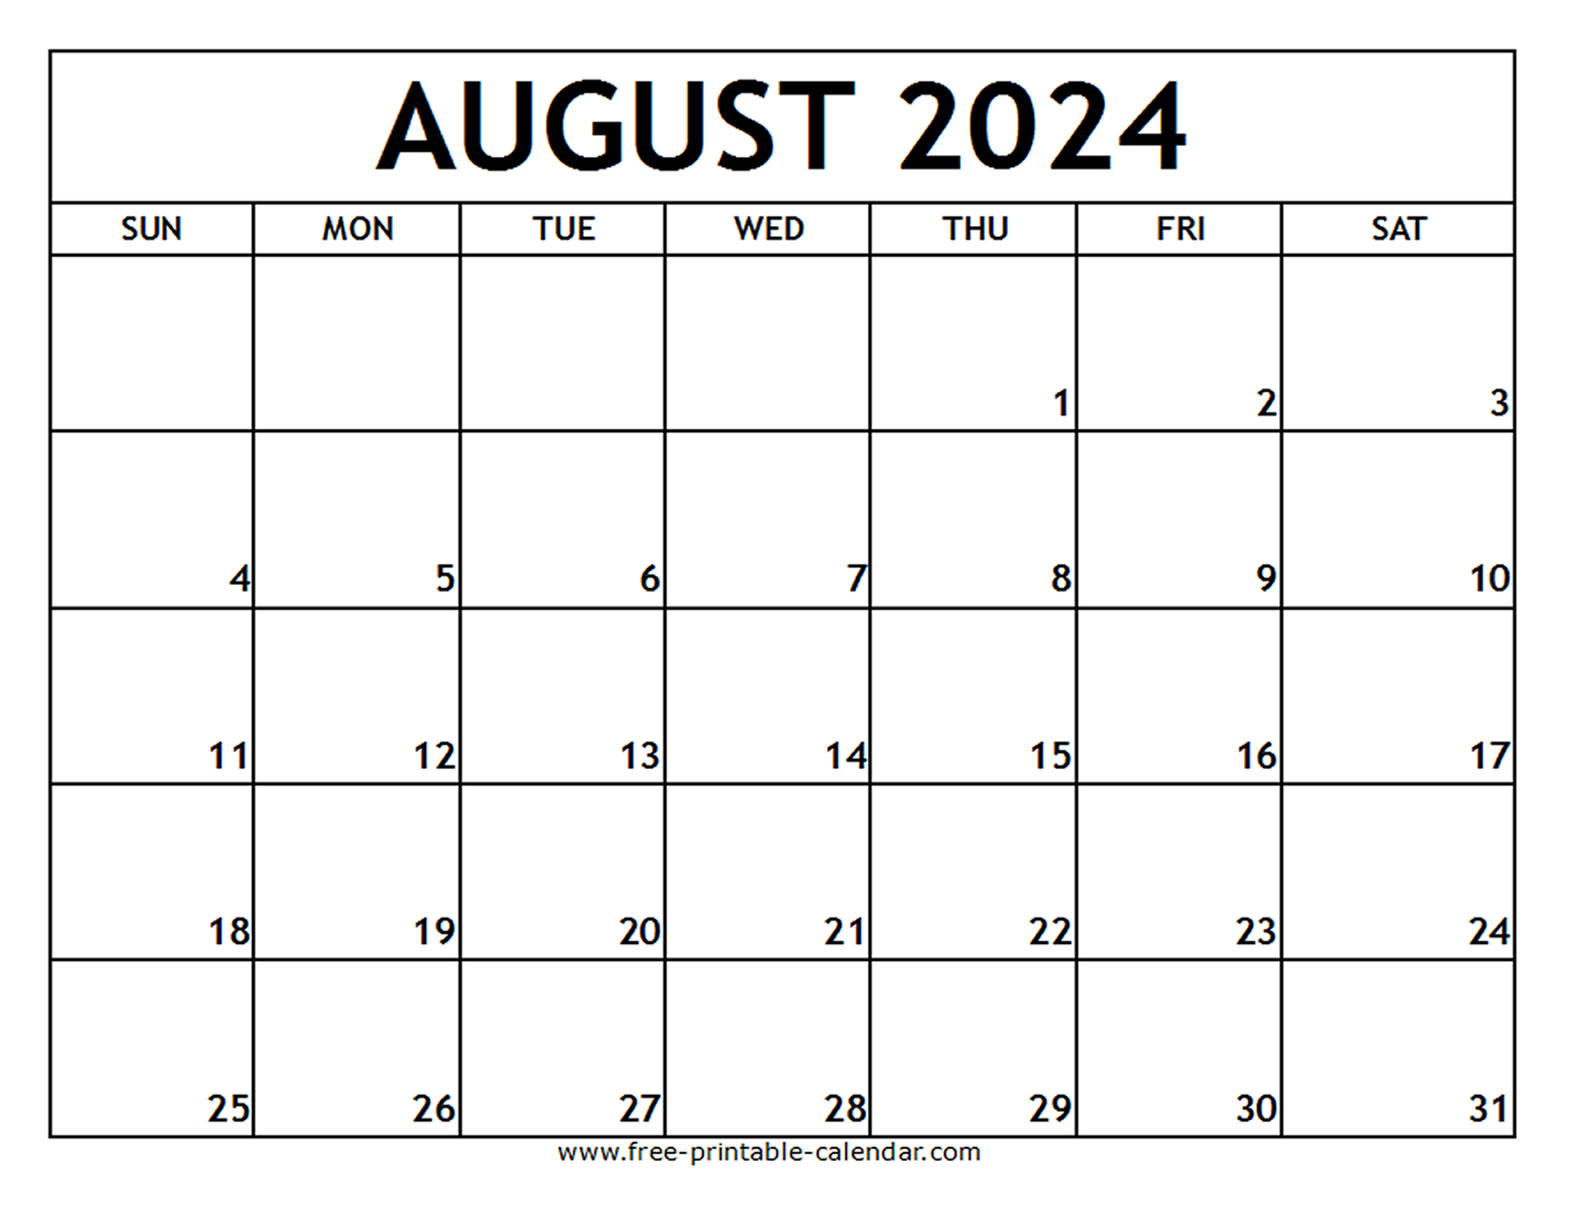 August 2024 Printable Calendar - Free-Printable-Calendar throughout Free Printable Calendar August 2024 Pdf